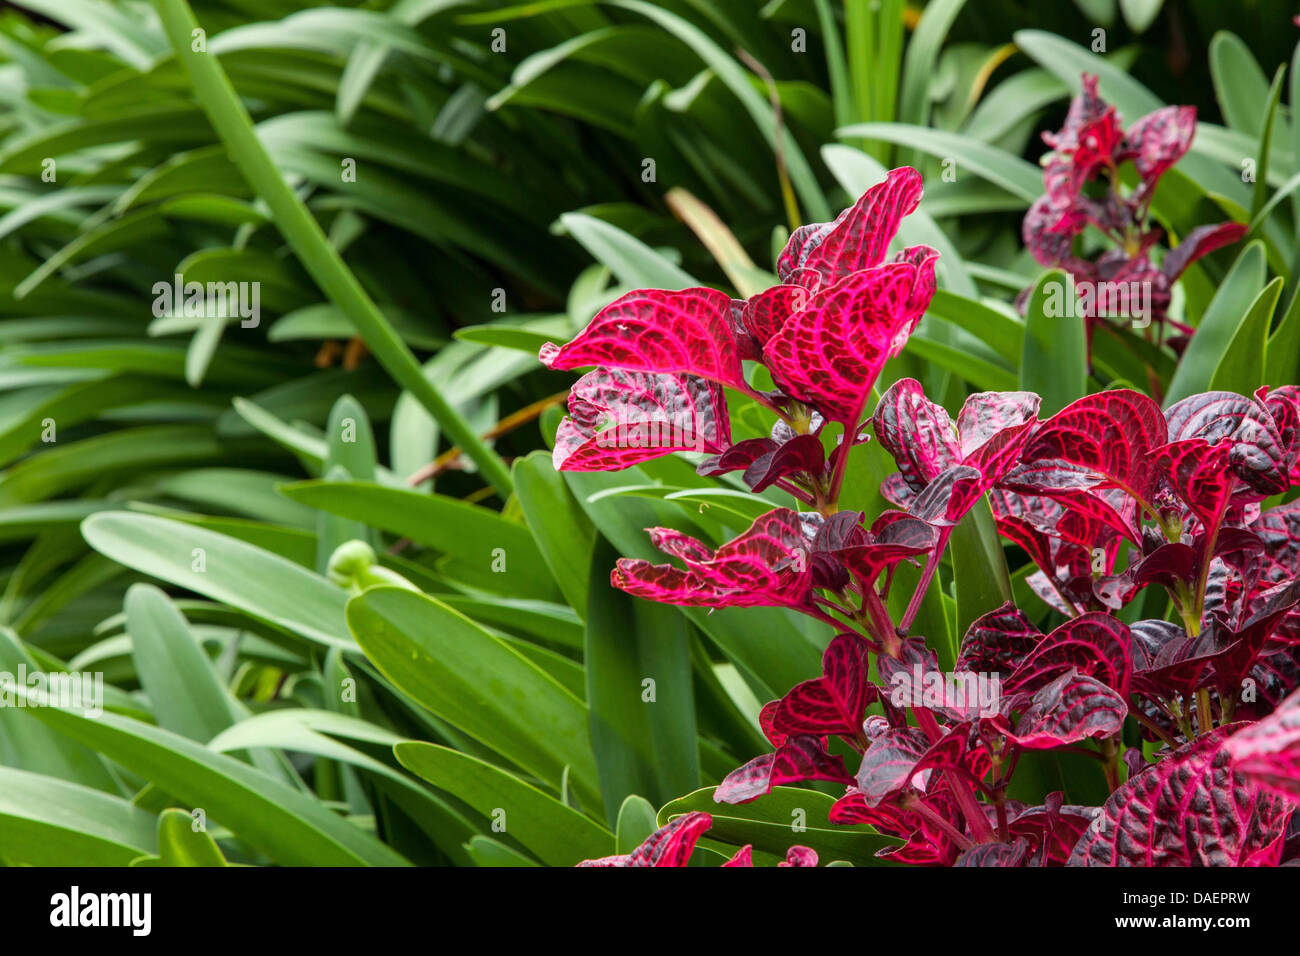 Planta ornamental exótica fotografías e imágenes de alta resolución - Alamy